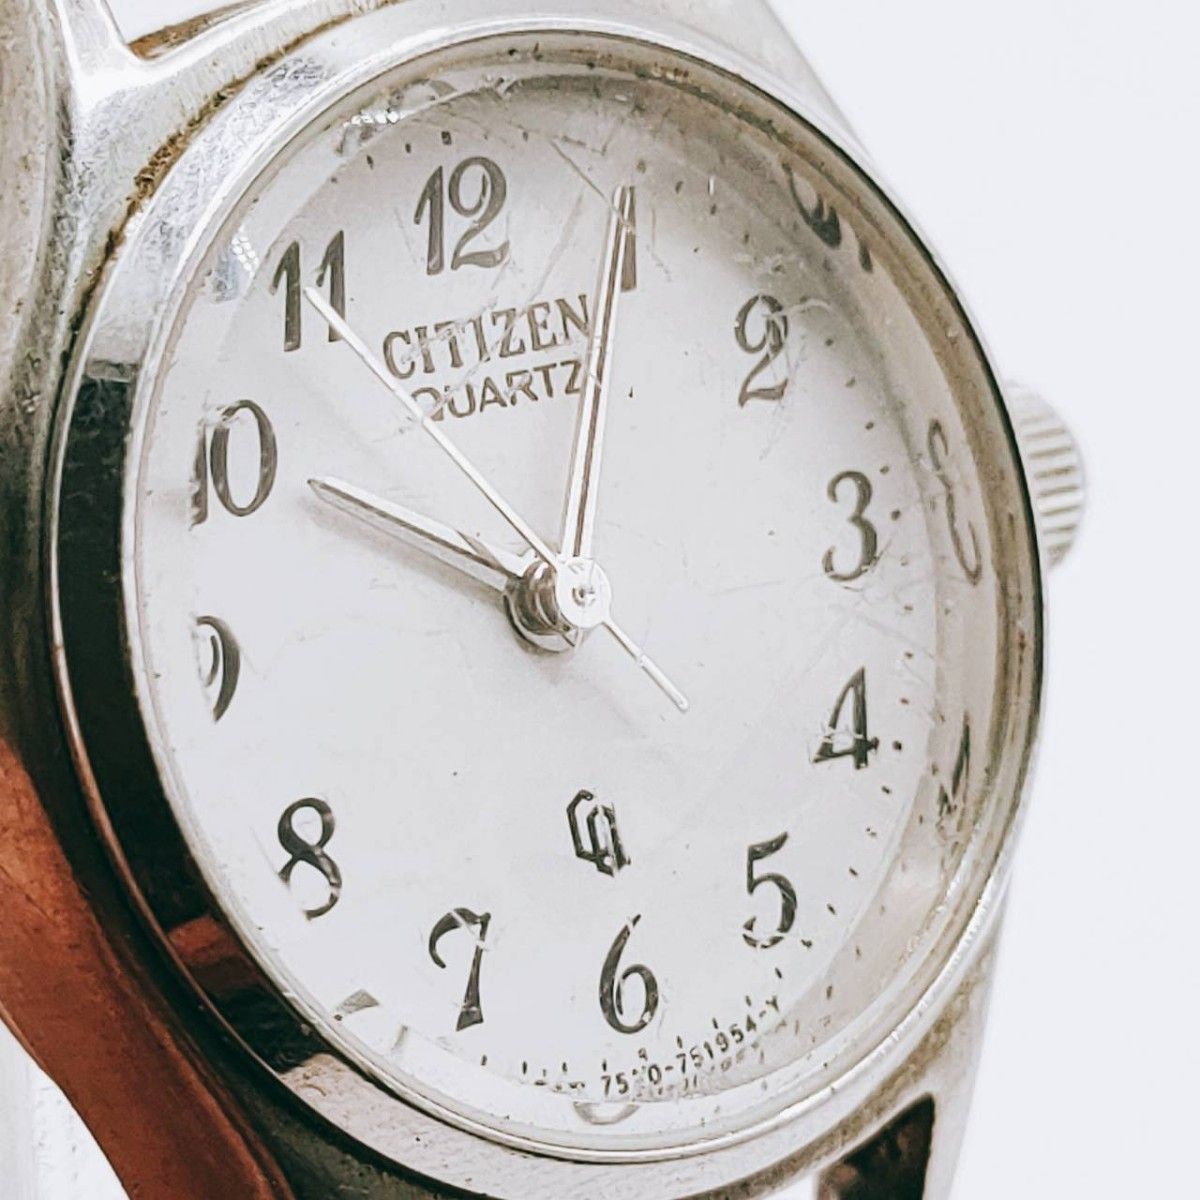 #73 CITIZEN シチズン 751302 腕時計 アナログ 3針 白文字盤 シルバー色 レディース 時計 とけい トケイ 